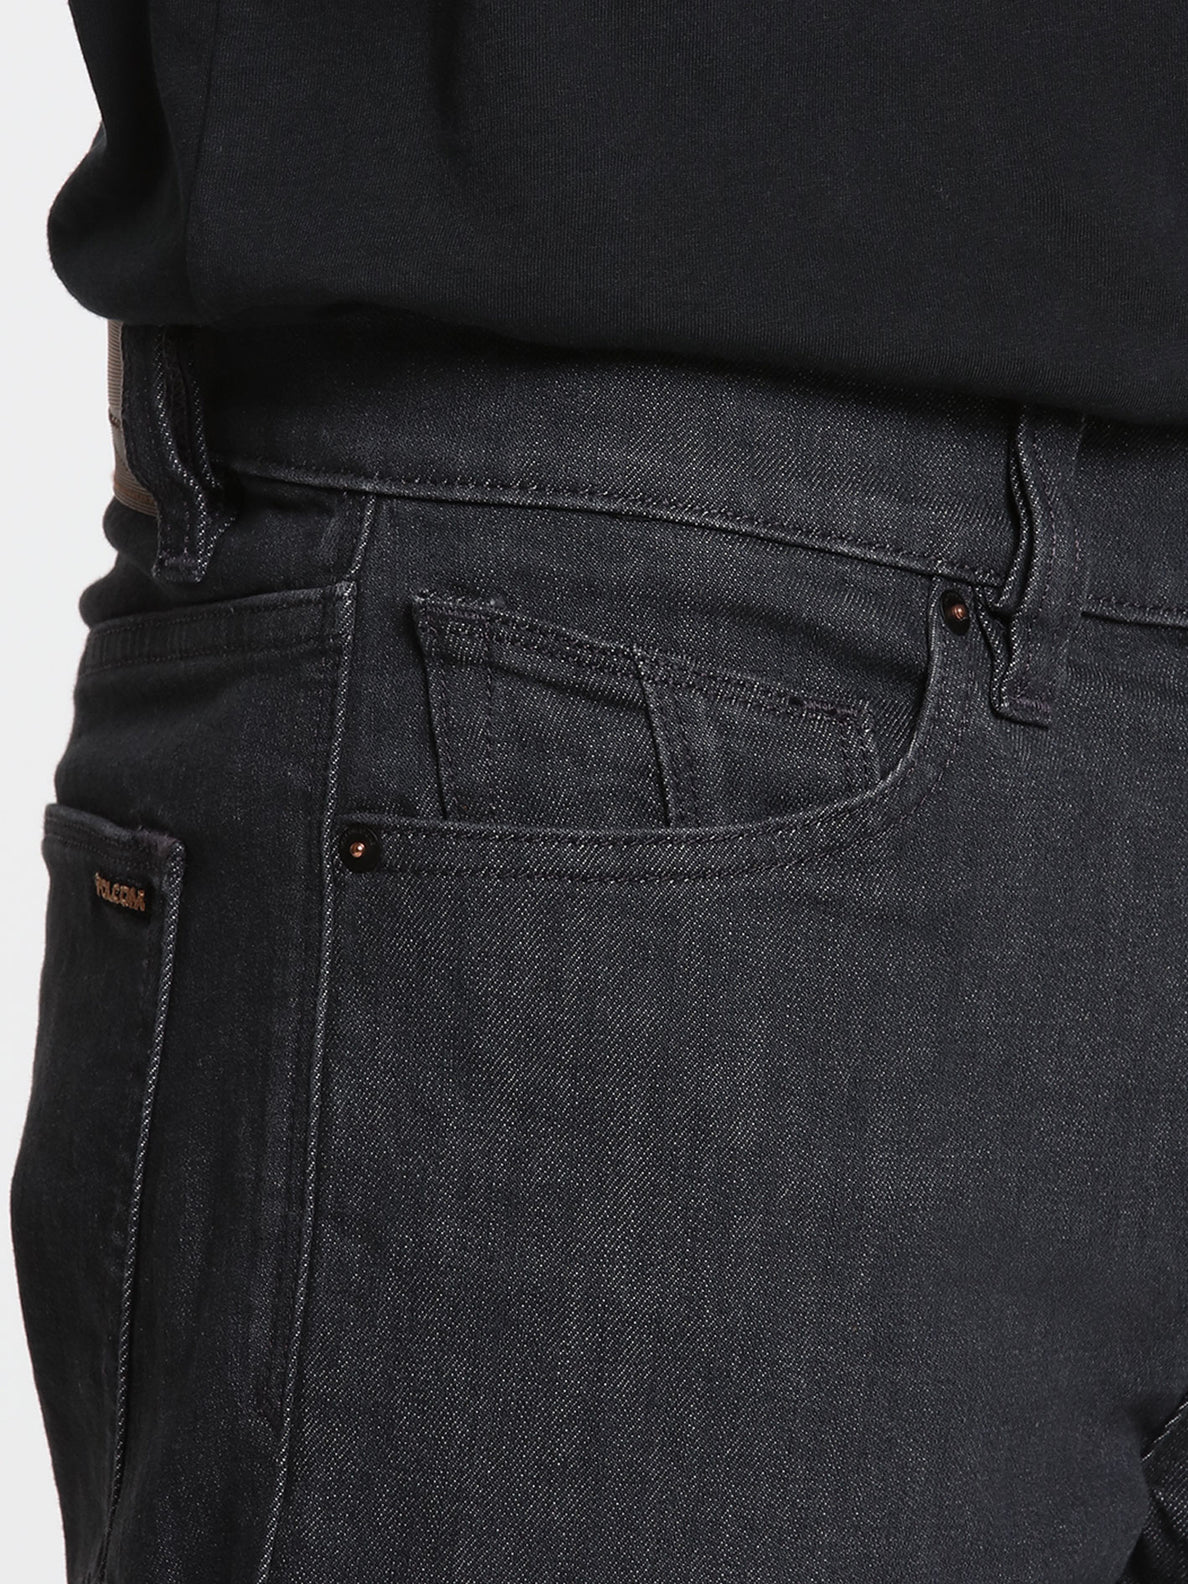 Vorta Slim Fit Jeans - Dark Grey – Volcom US